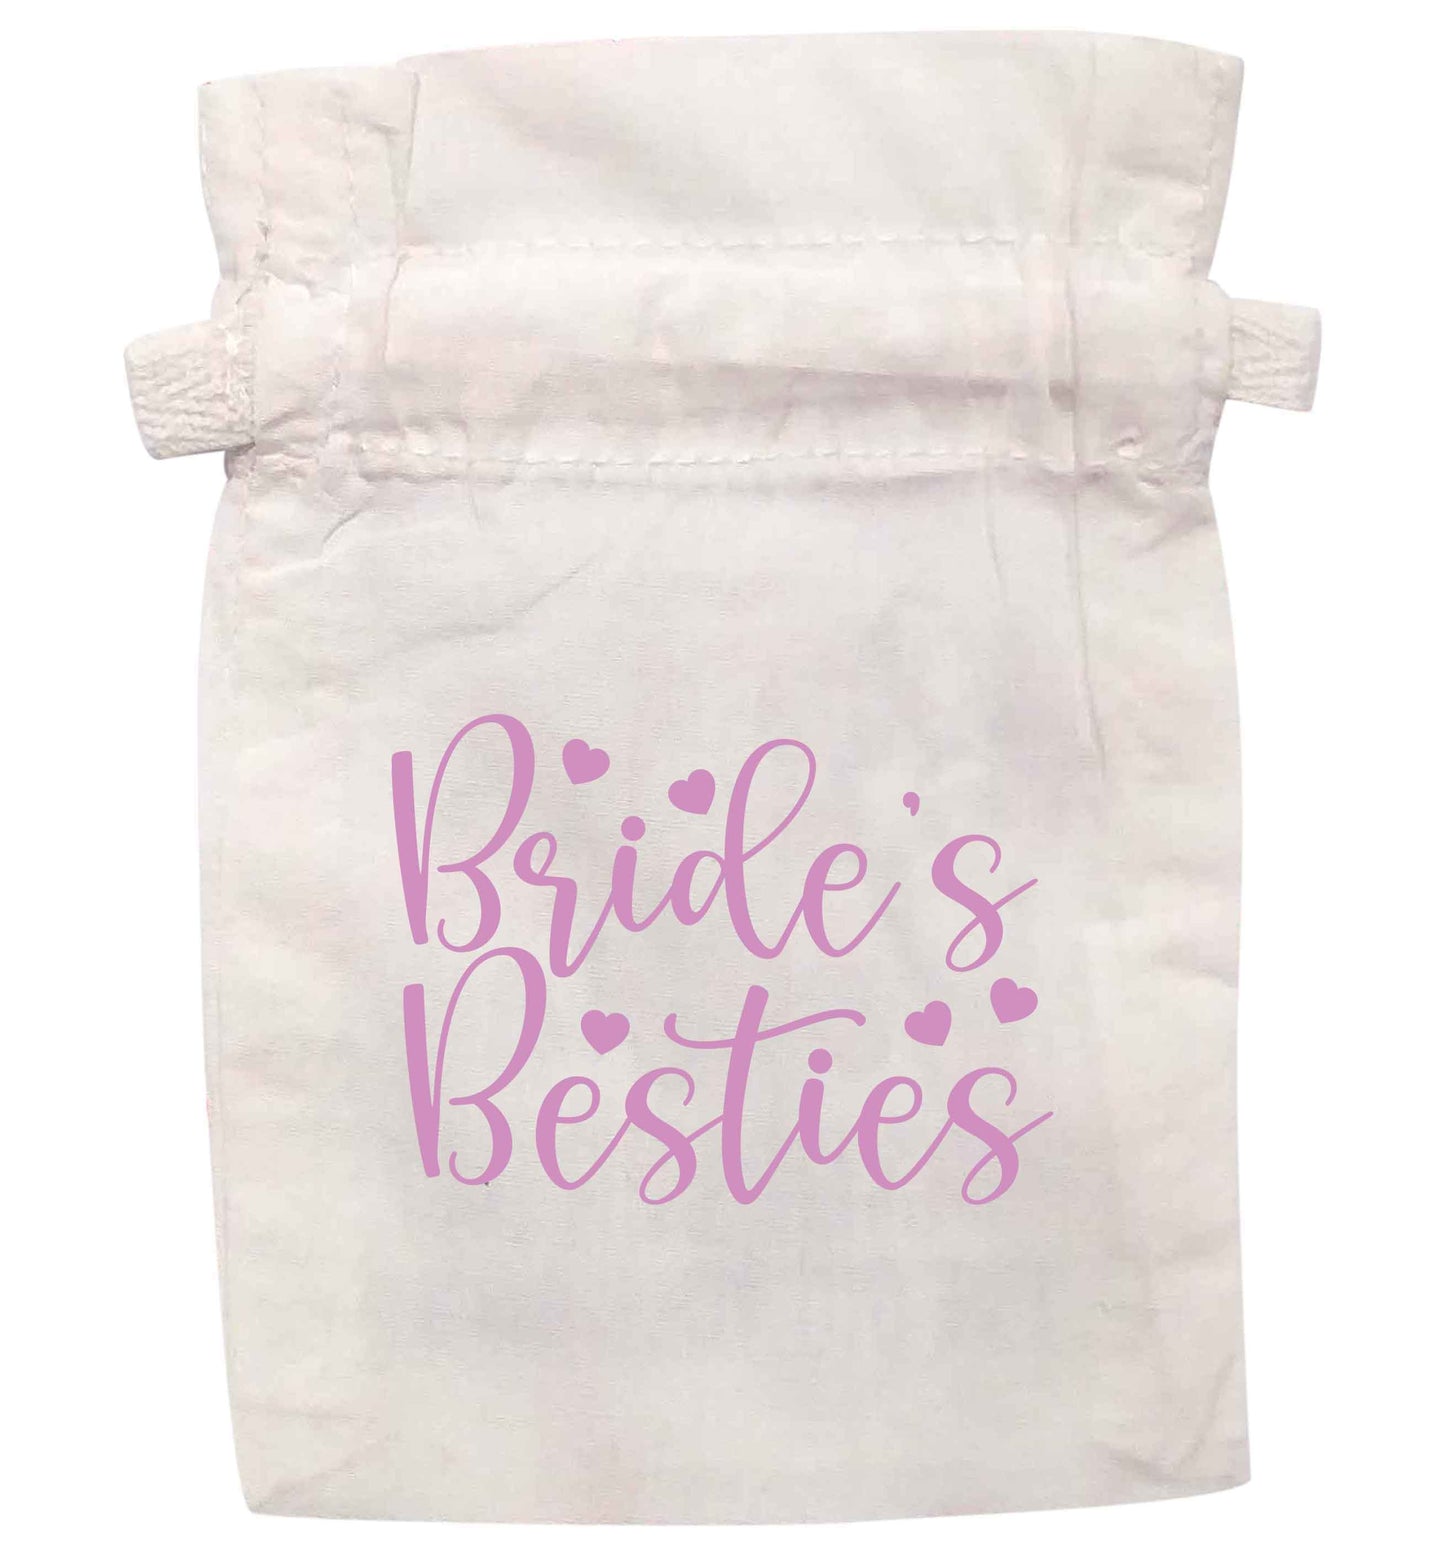 Brides besties | XS - L | Pouch / Drawstring bag | Organic Cotton | Bulk discounts available!